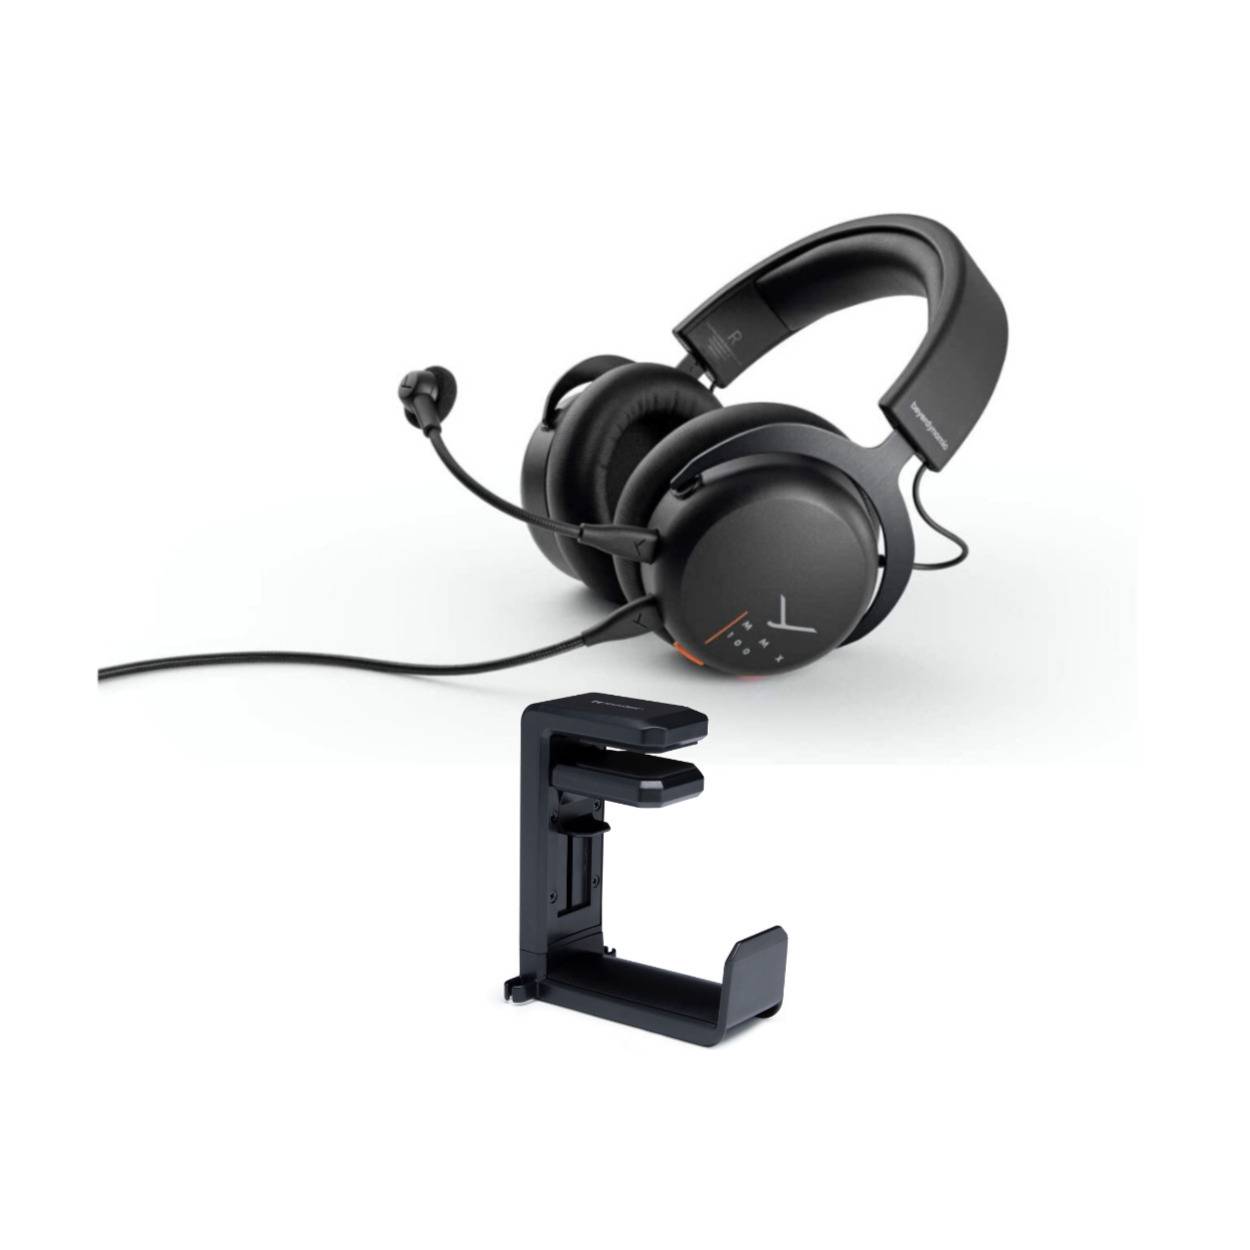 Beyerdynamic MMX 100 Analog Gaming Headset (Black) with Knox Gear Headphone Mount Bundle